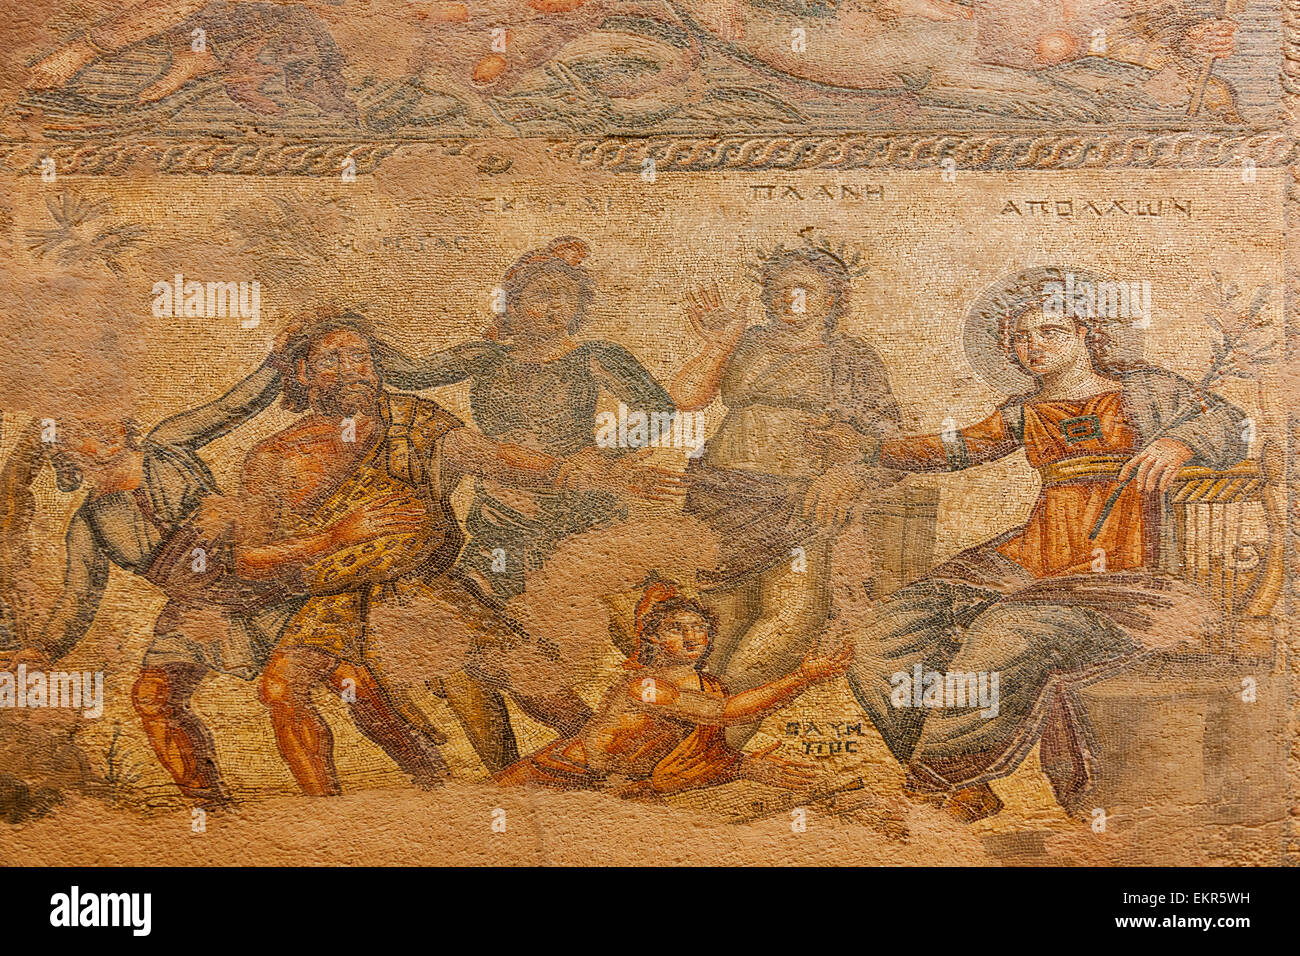 Pittura a mosaico nel parco archeologico, Paphos (Paphos), la Repubblica di Cipro Foto Stock